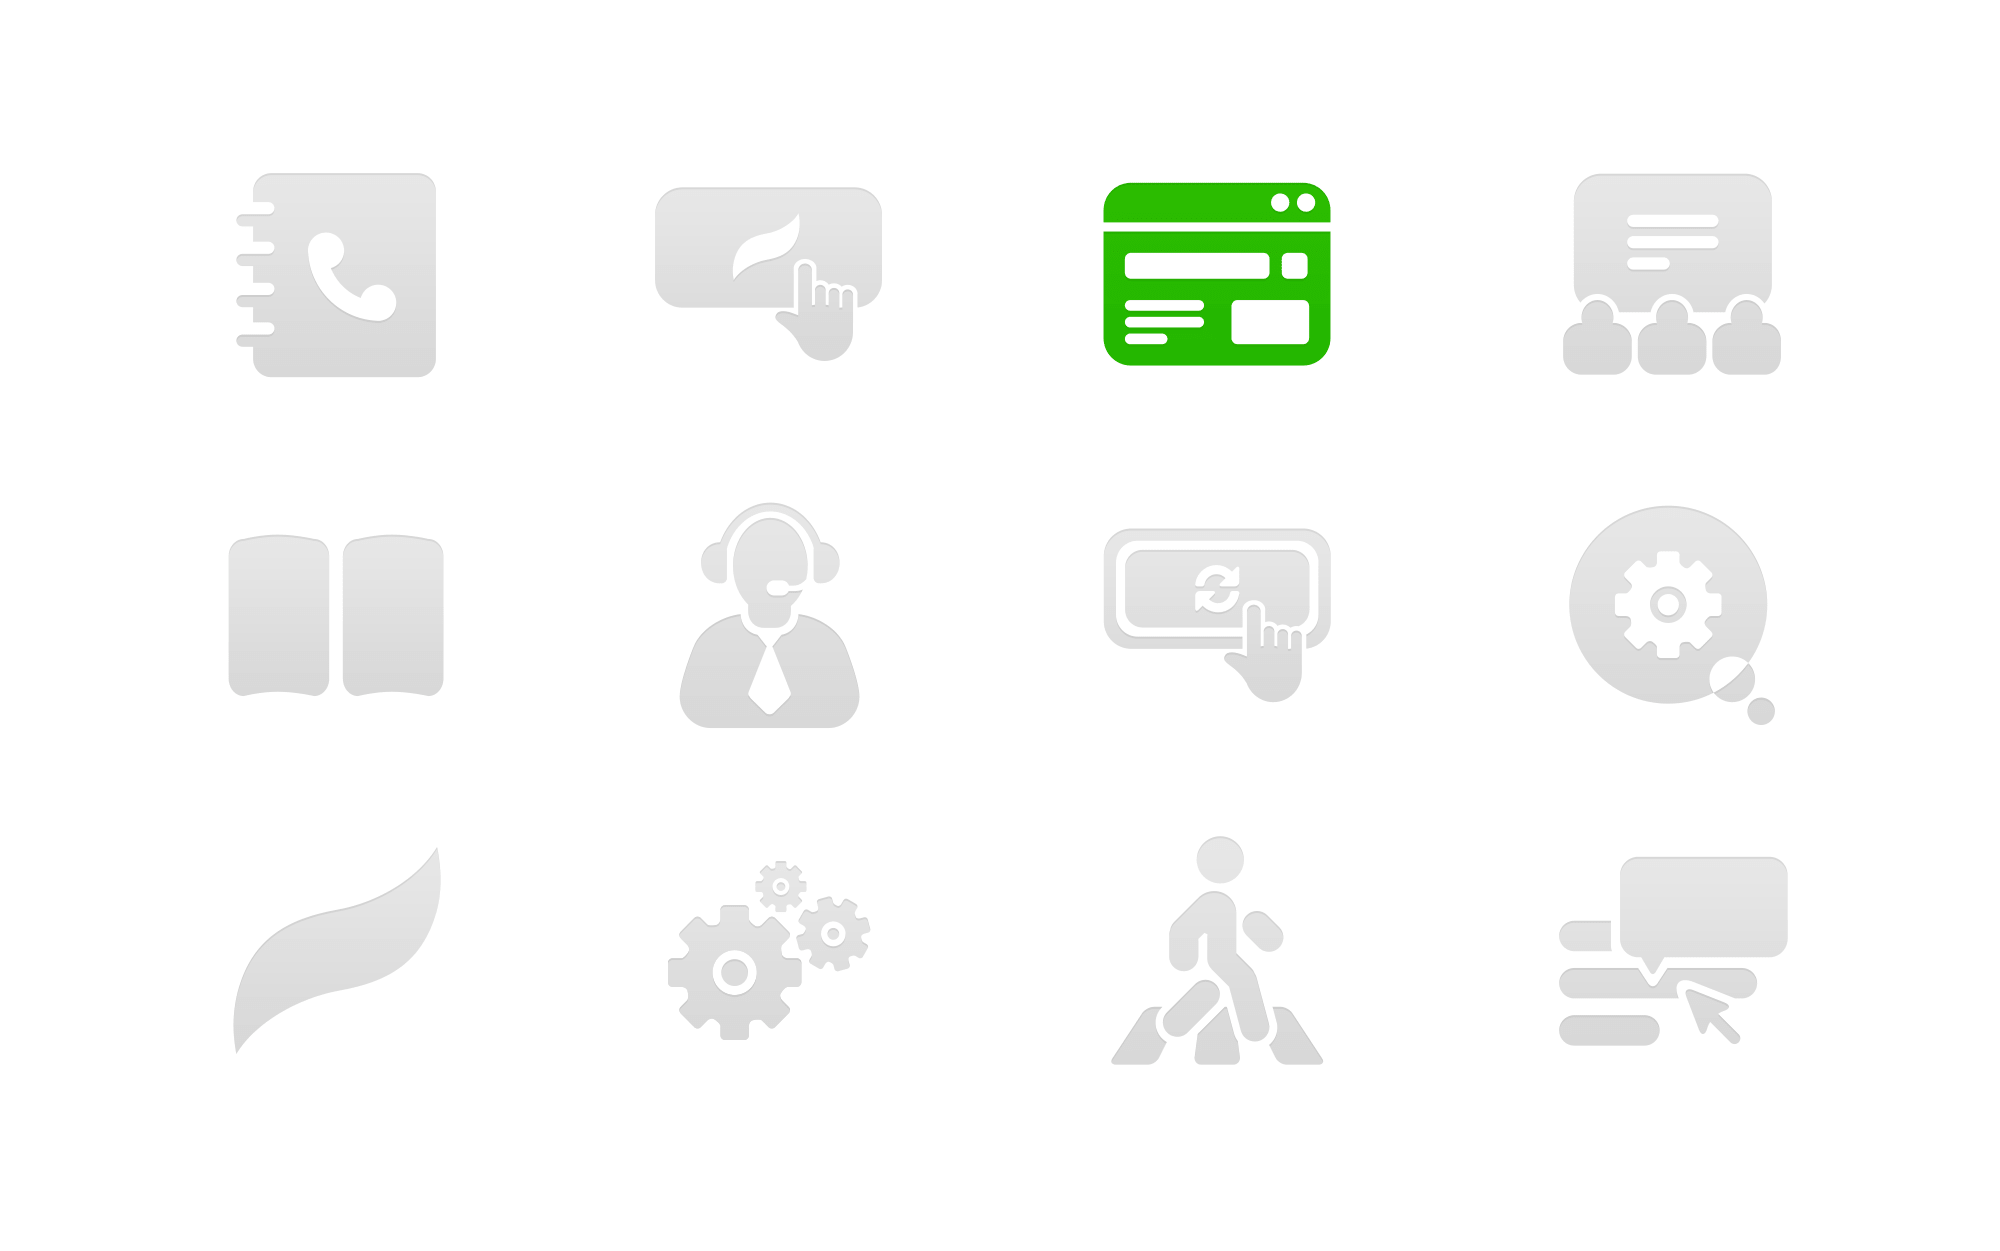 Icons design for advertising platform